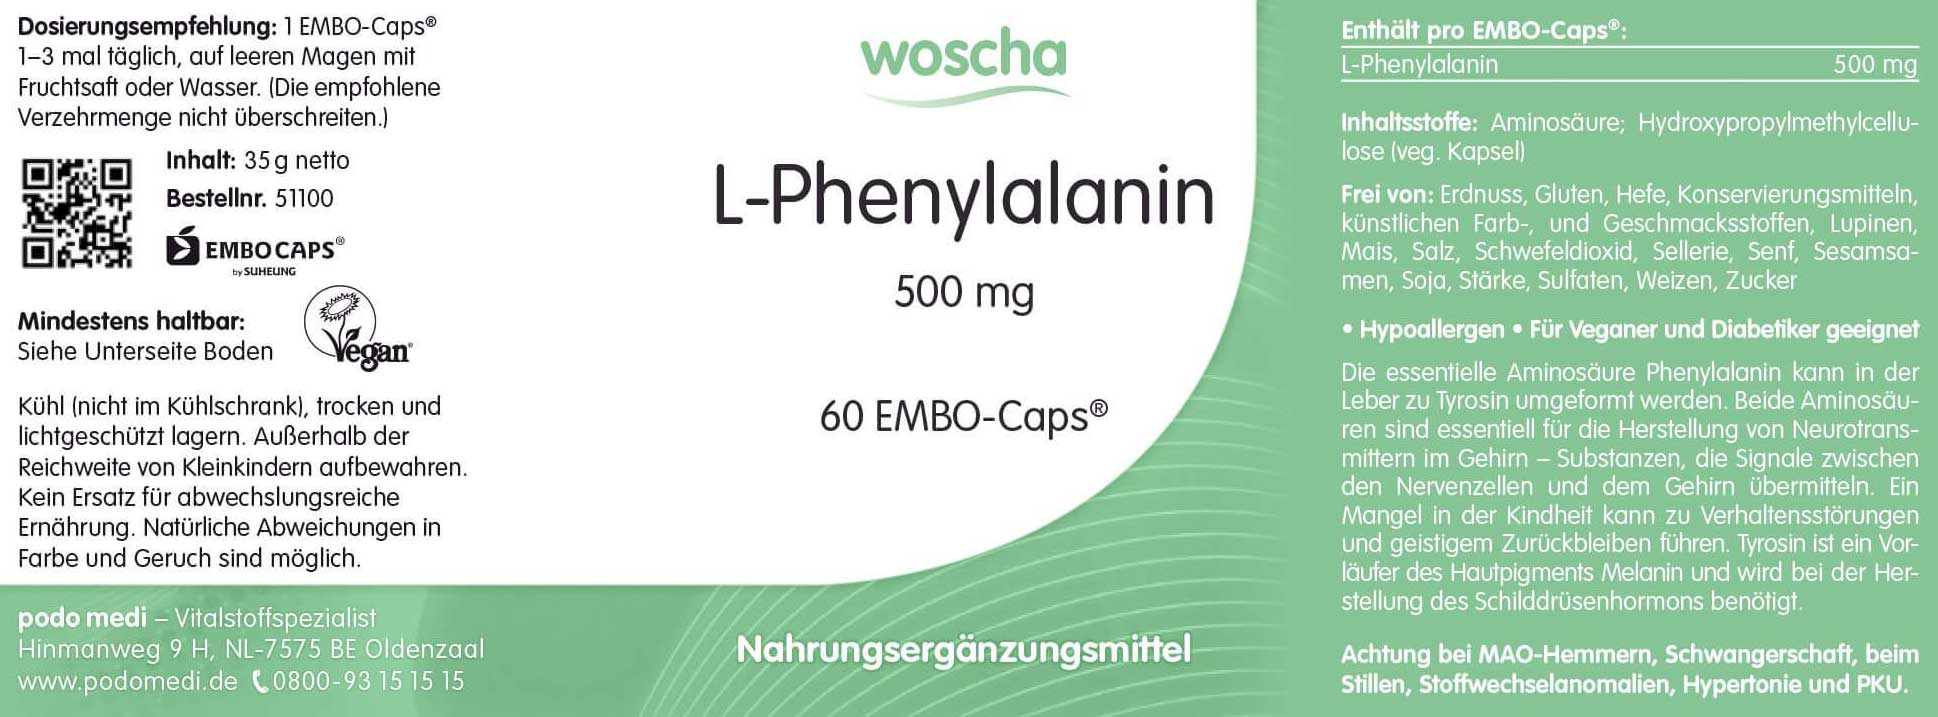 Woscha L-Phenylalanin 500 Milligramm von podo medi beinhaltet 60 Kapseln Etikett